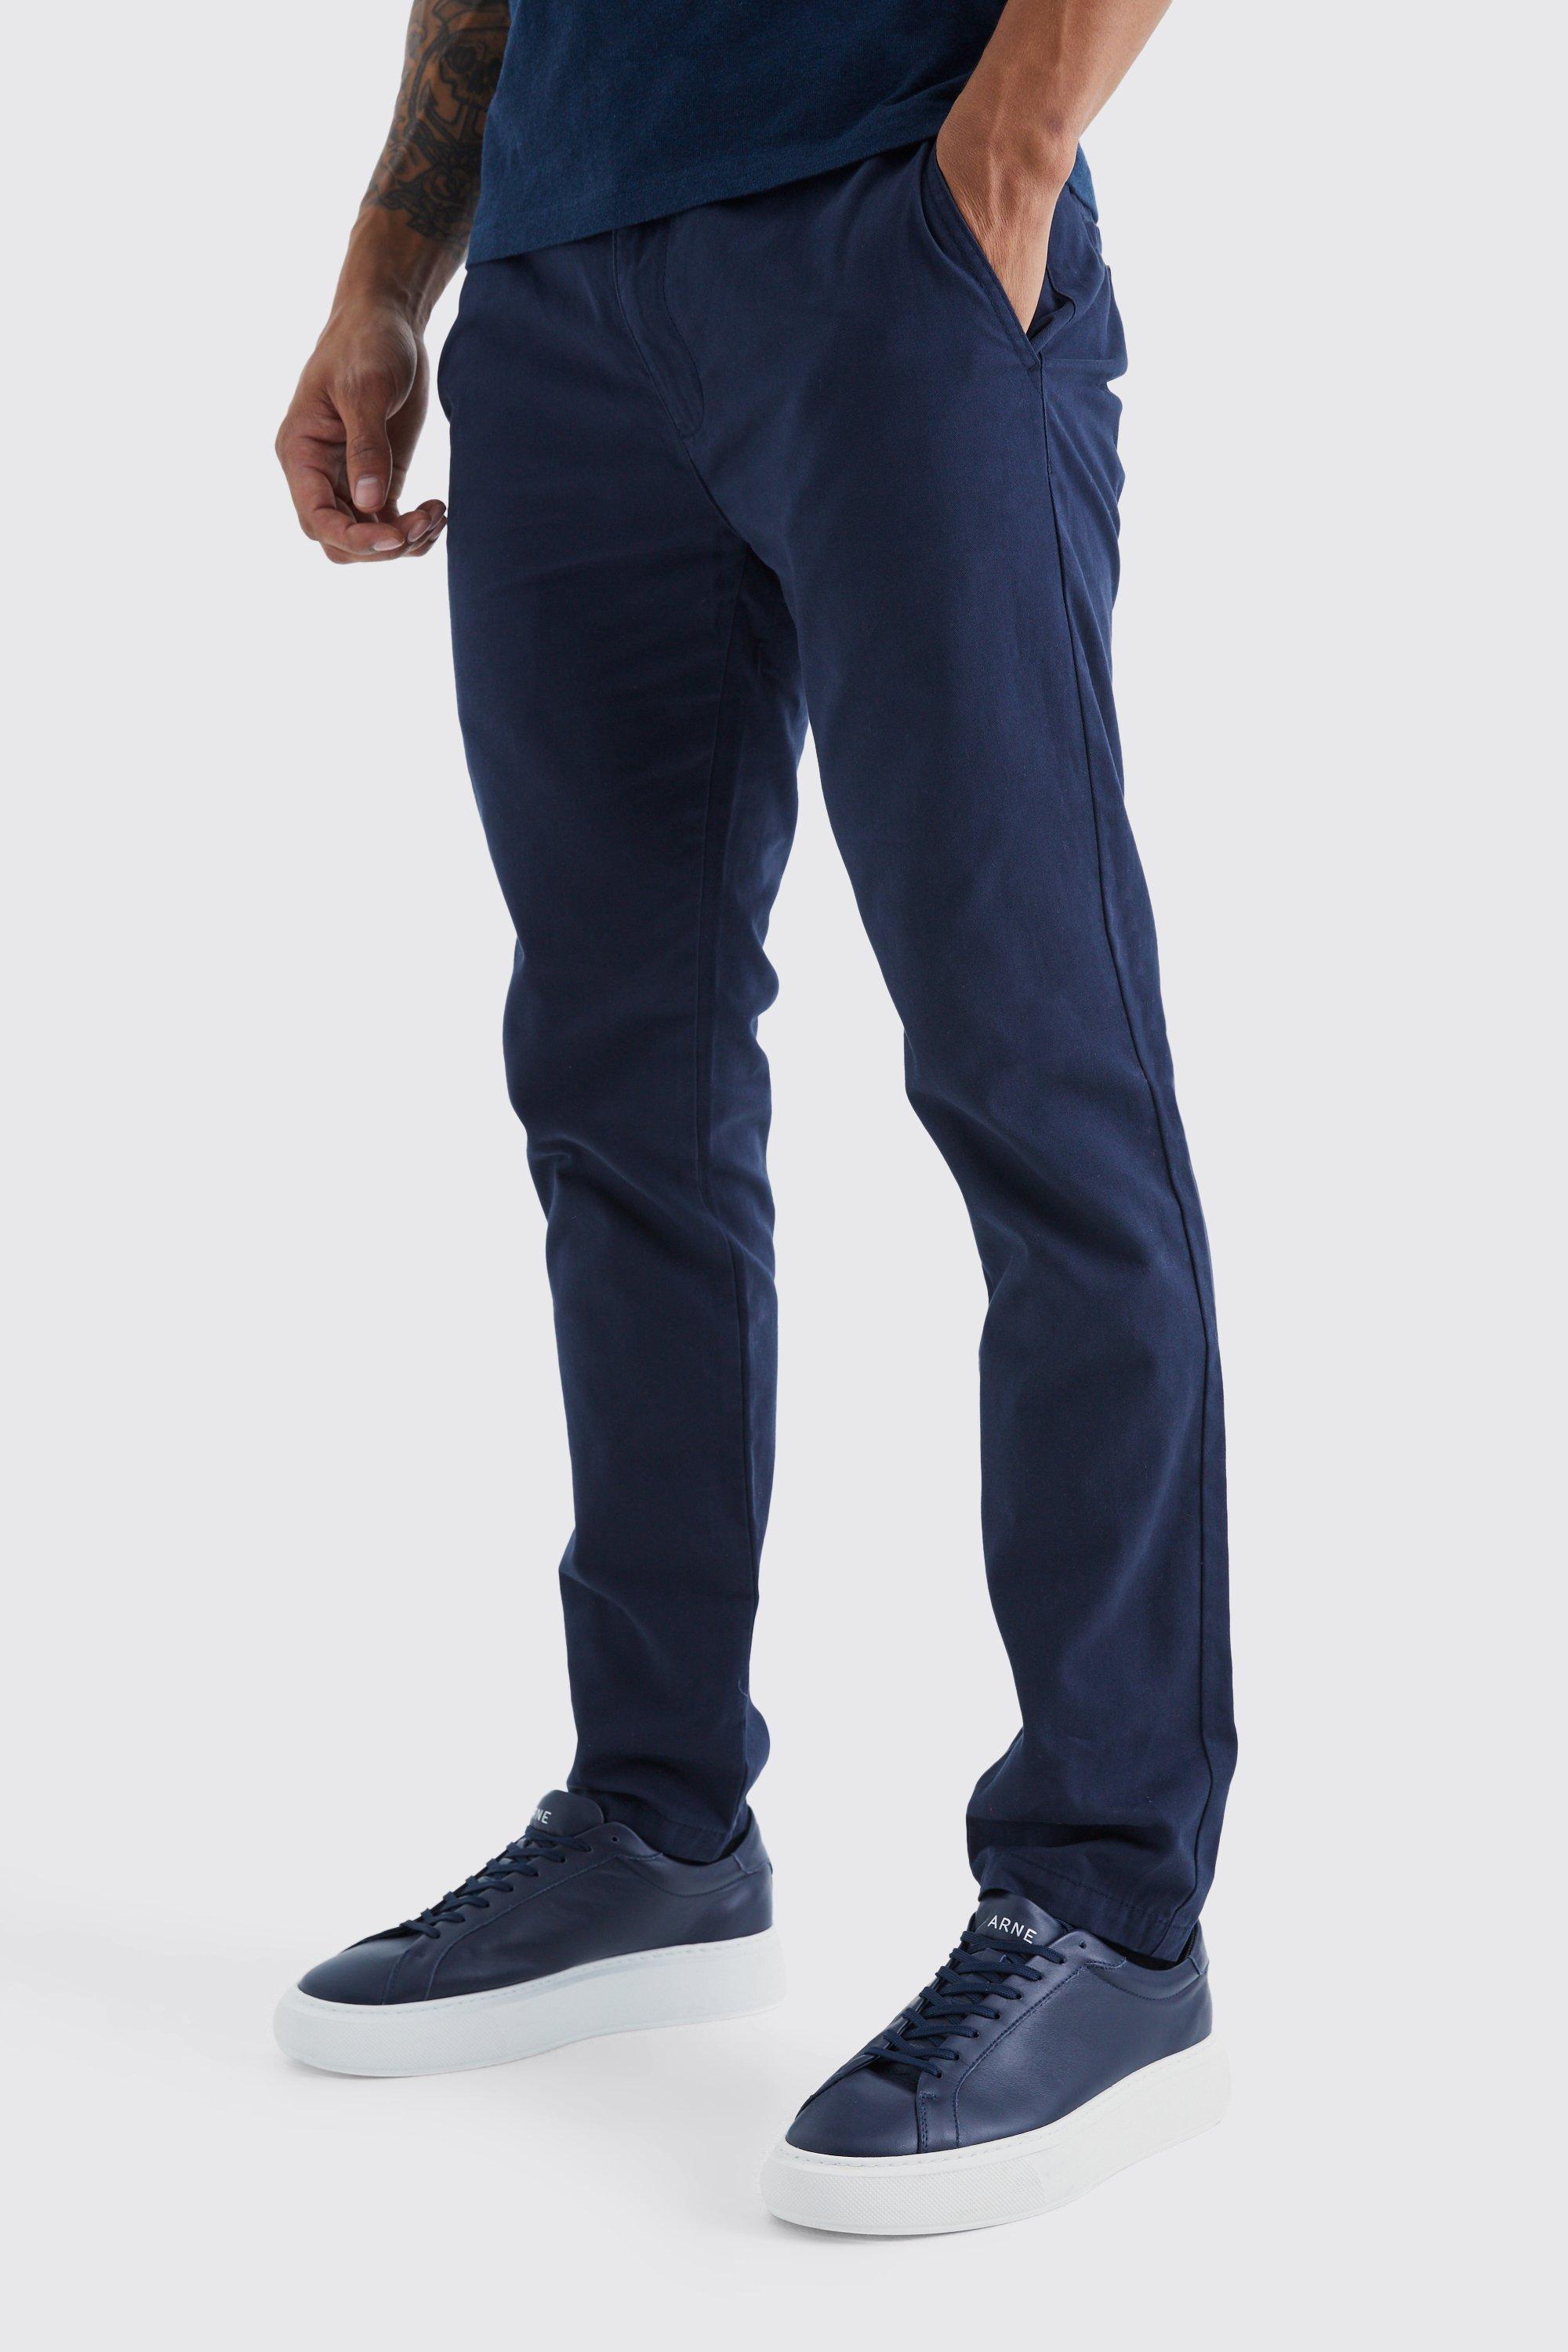 pantalon chino skinny homme - bleu - 28, bleu